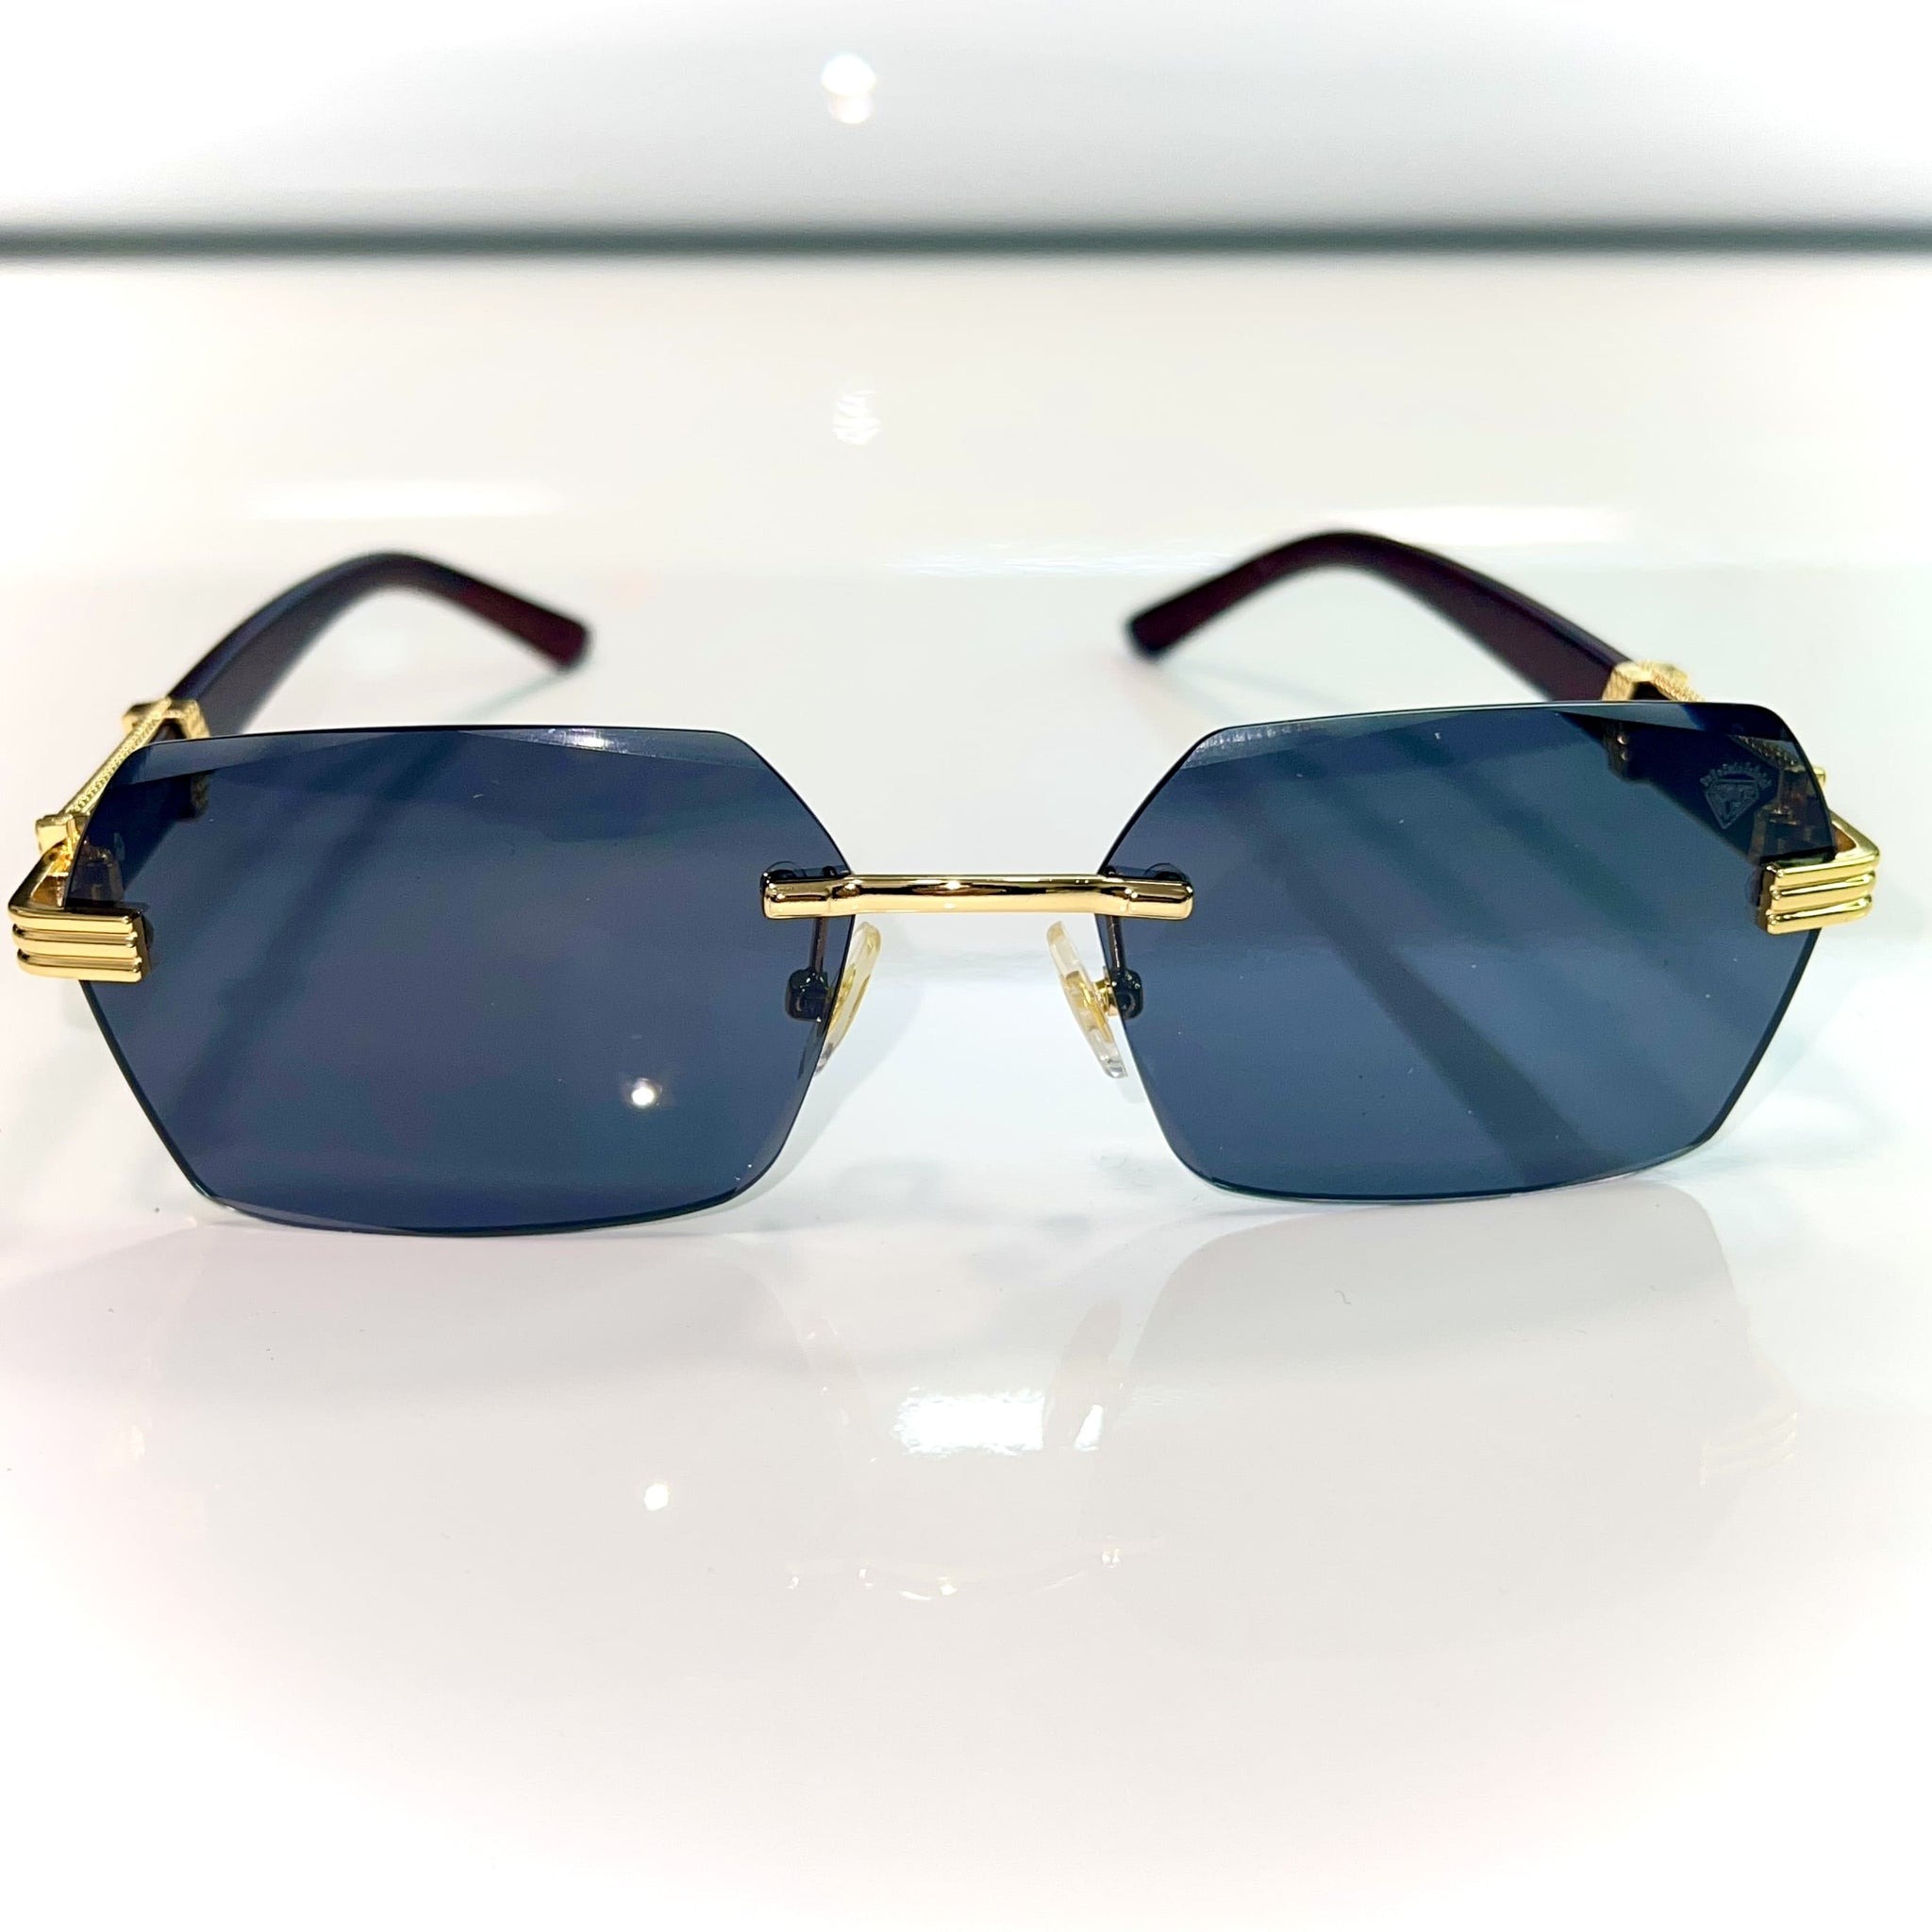 Sehgal Woodcut Glasses - 14k gold plated - Black shade - Gold / Woodgrain frame